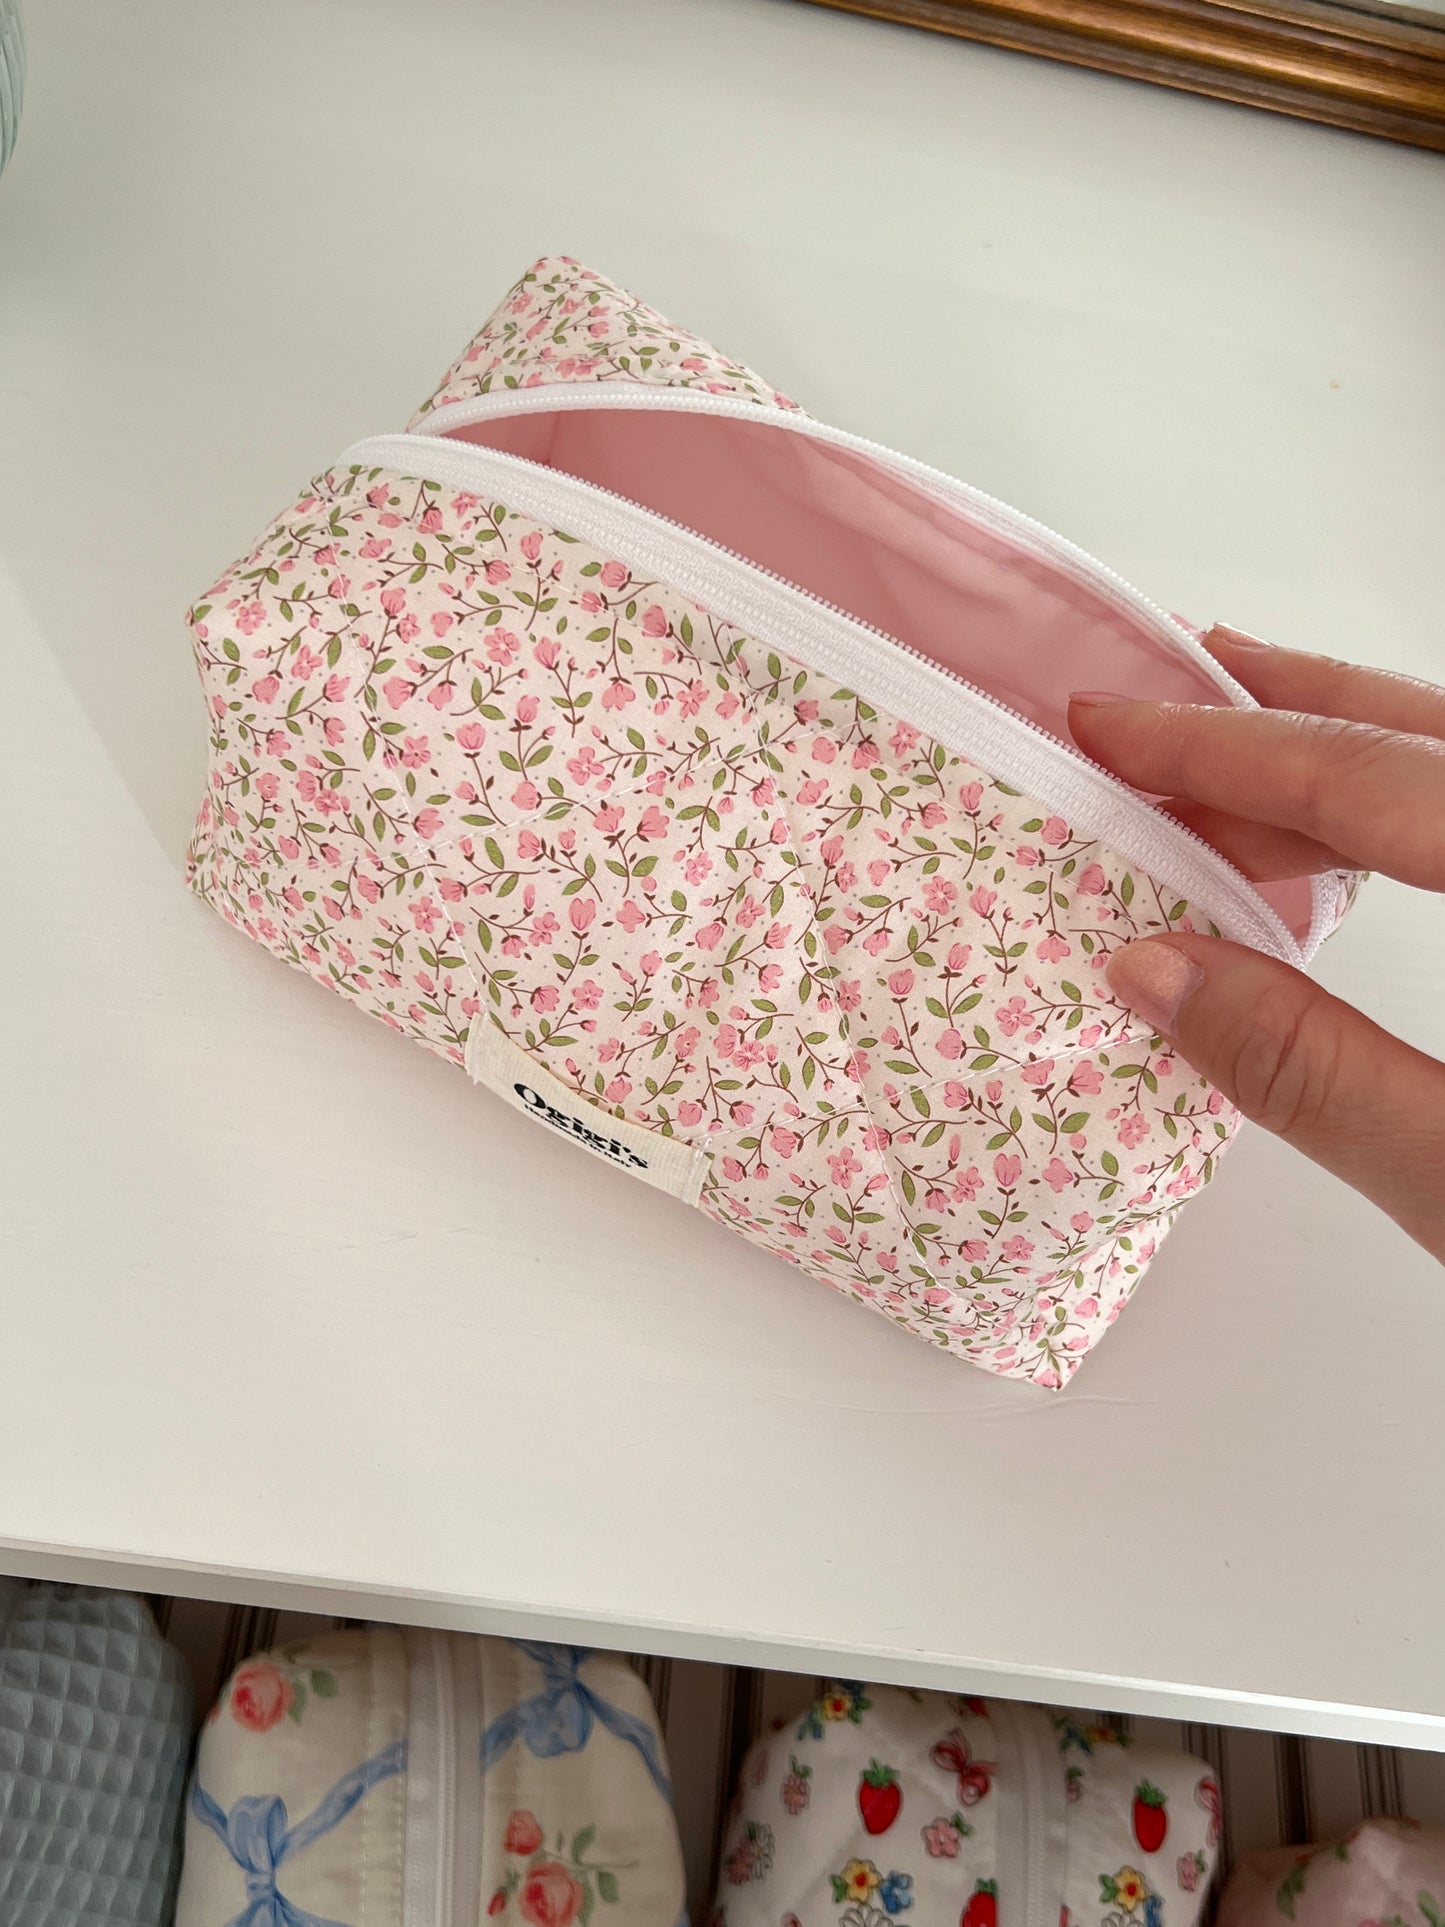 My pink beauty case